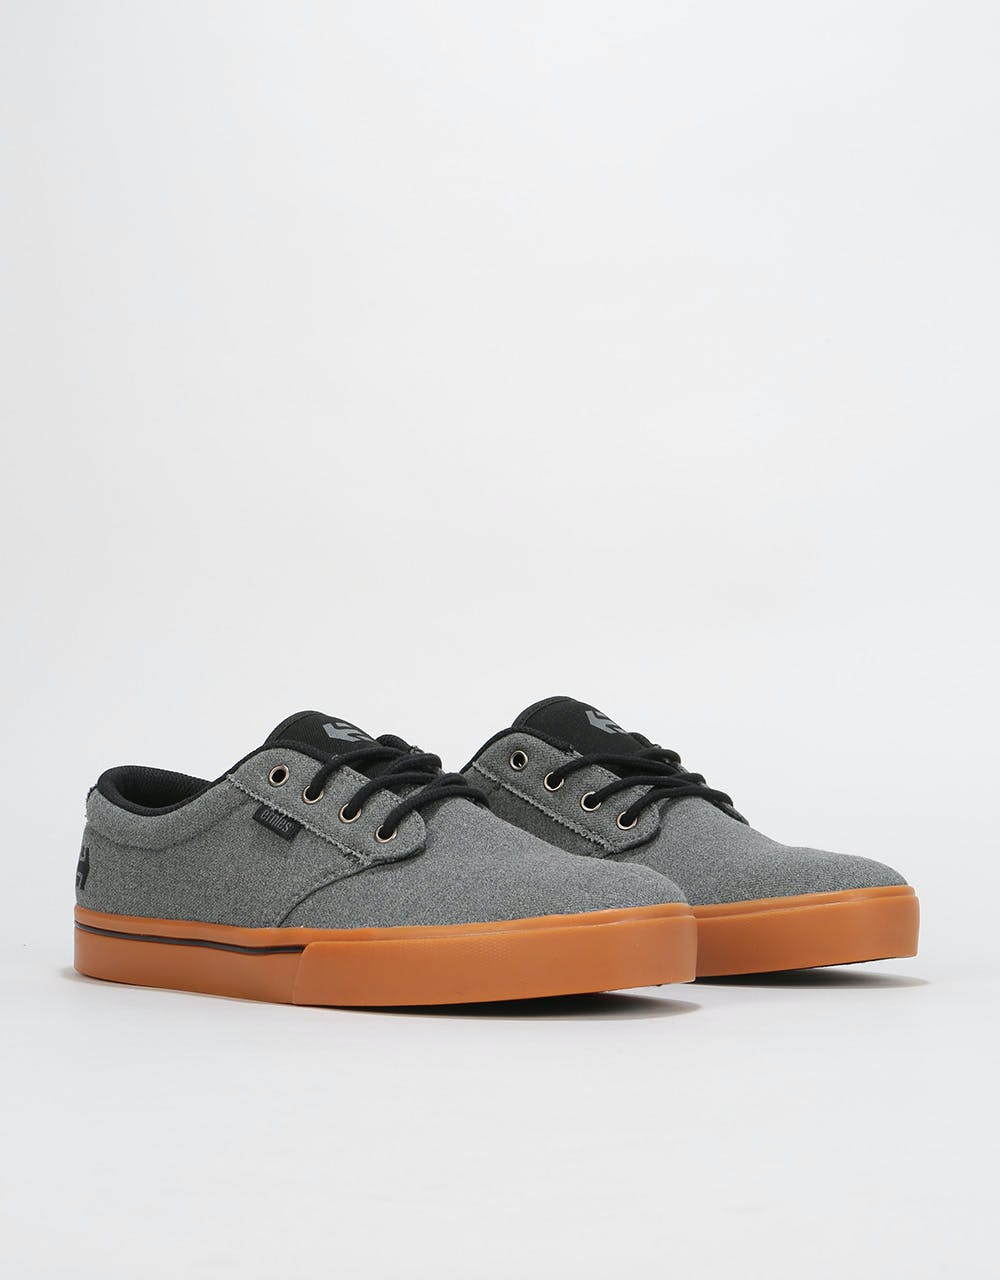 Etnies Jameson 2 Eco Skate Shoes - Grey/Black/Orange